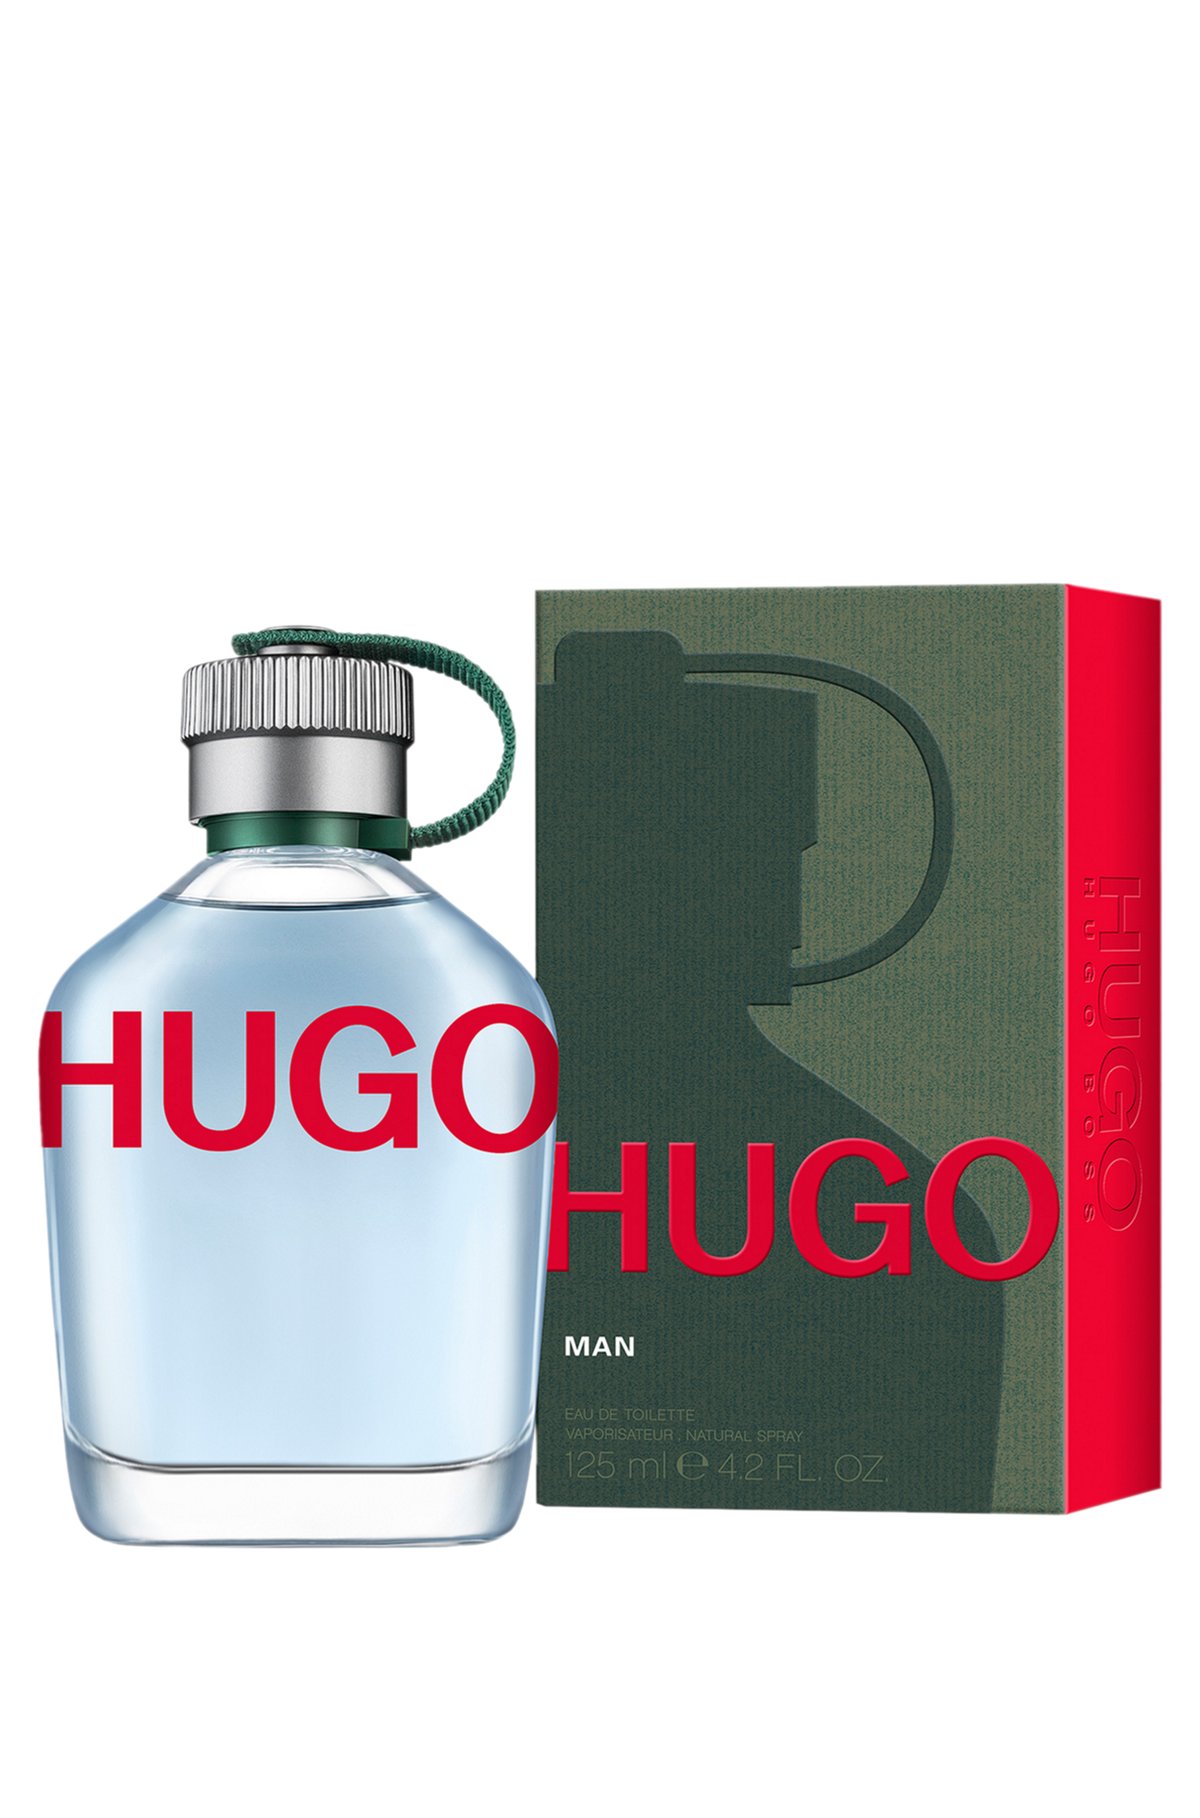 Where Can I Buy Hugo Boss Perfume Shop | website.jkuat.ac.ke